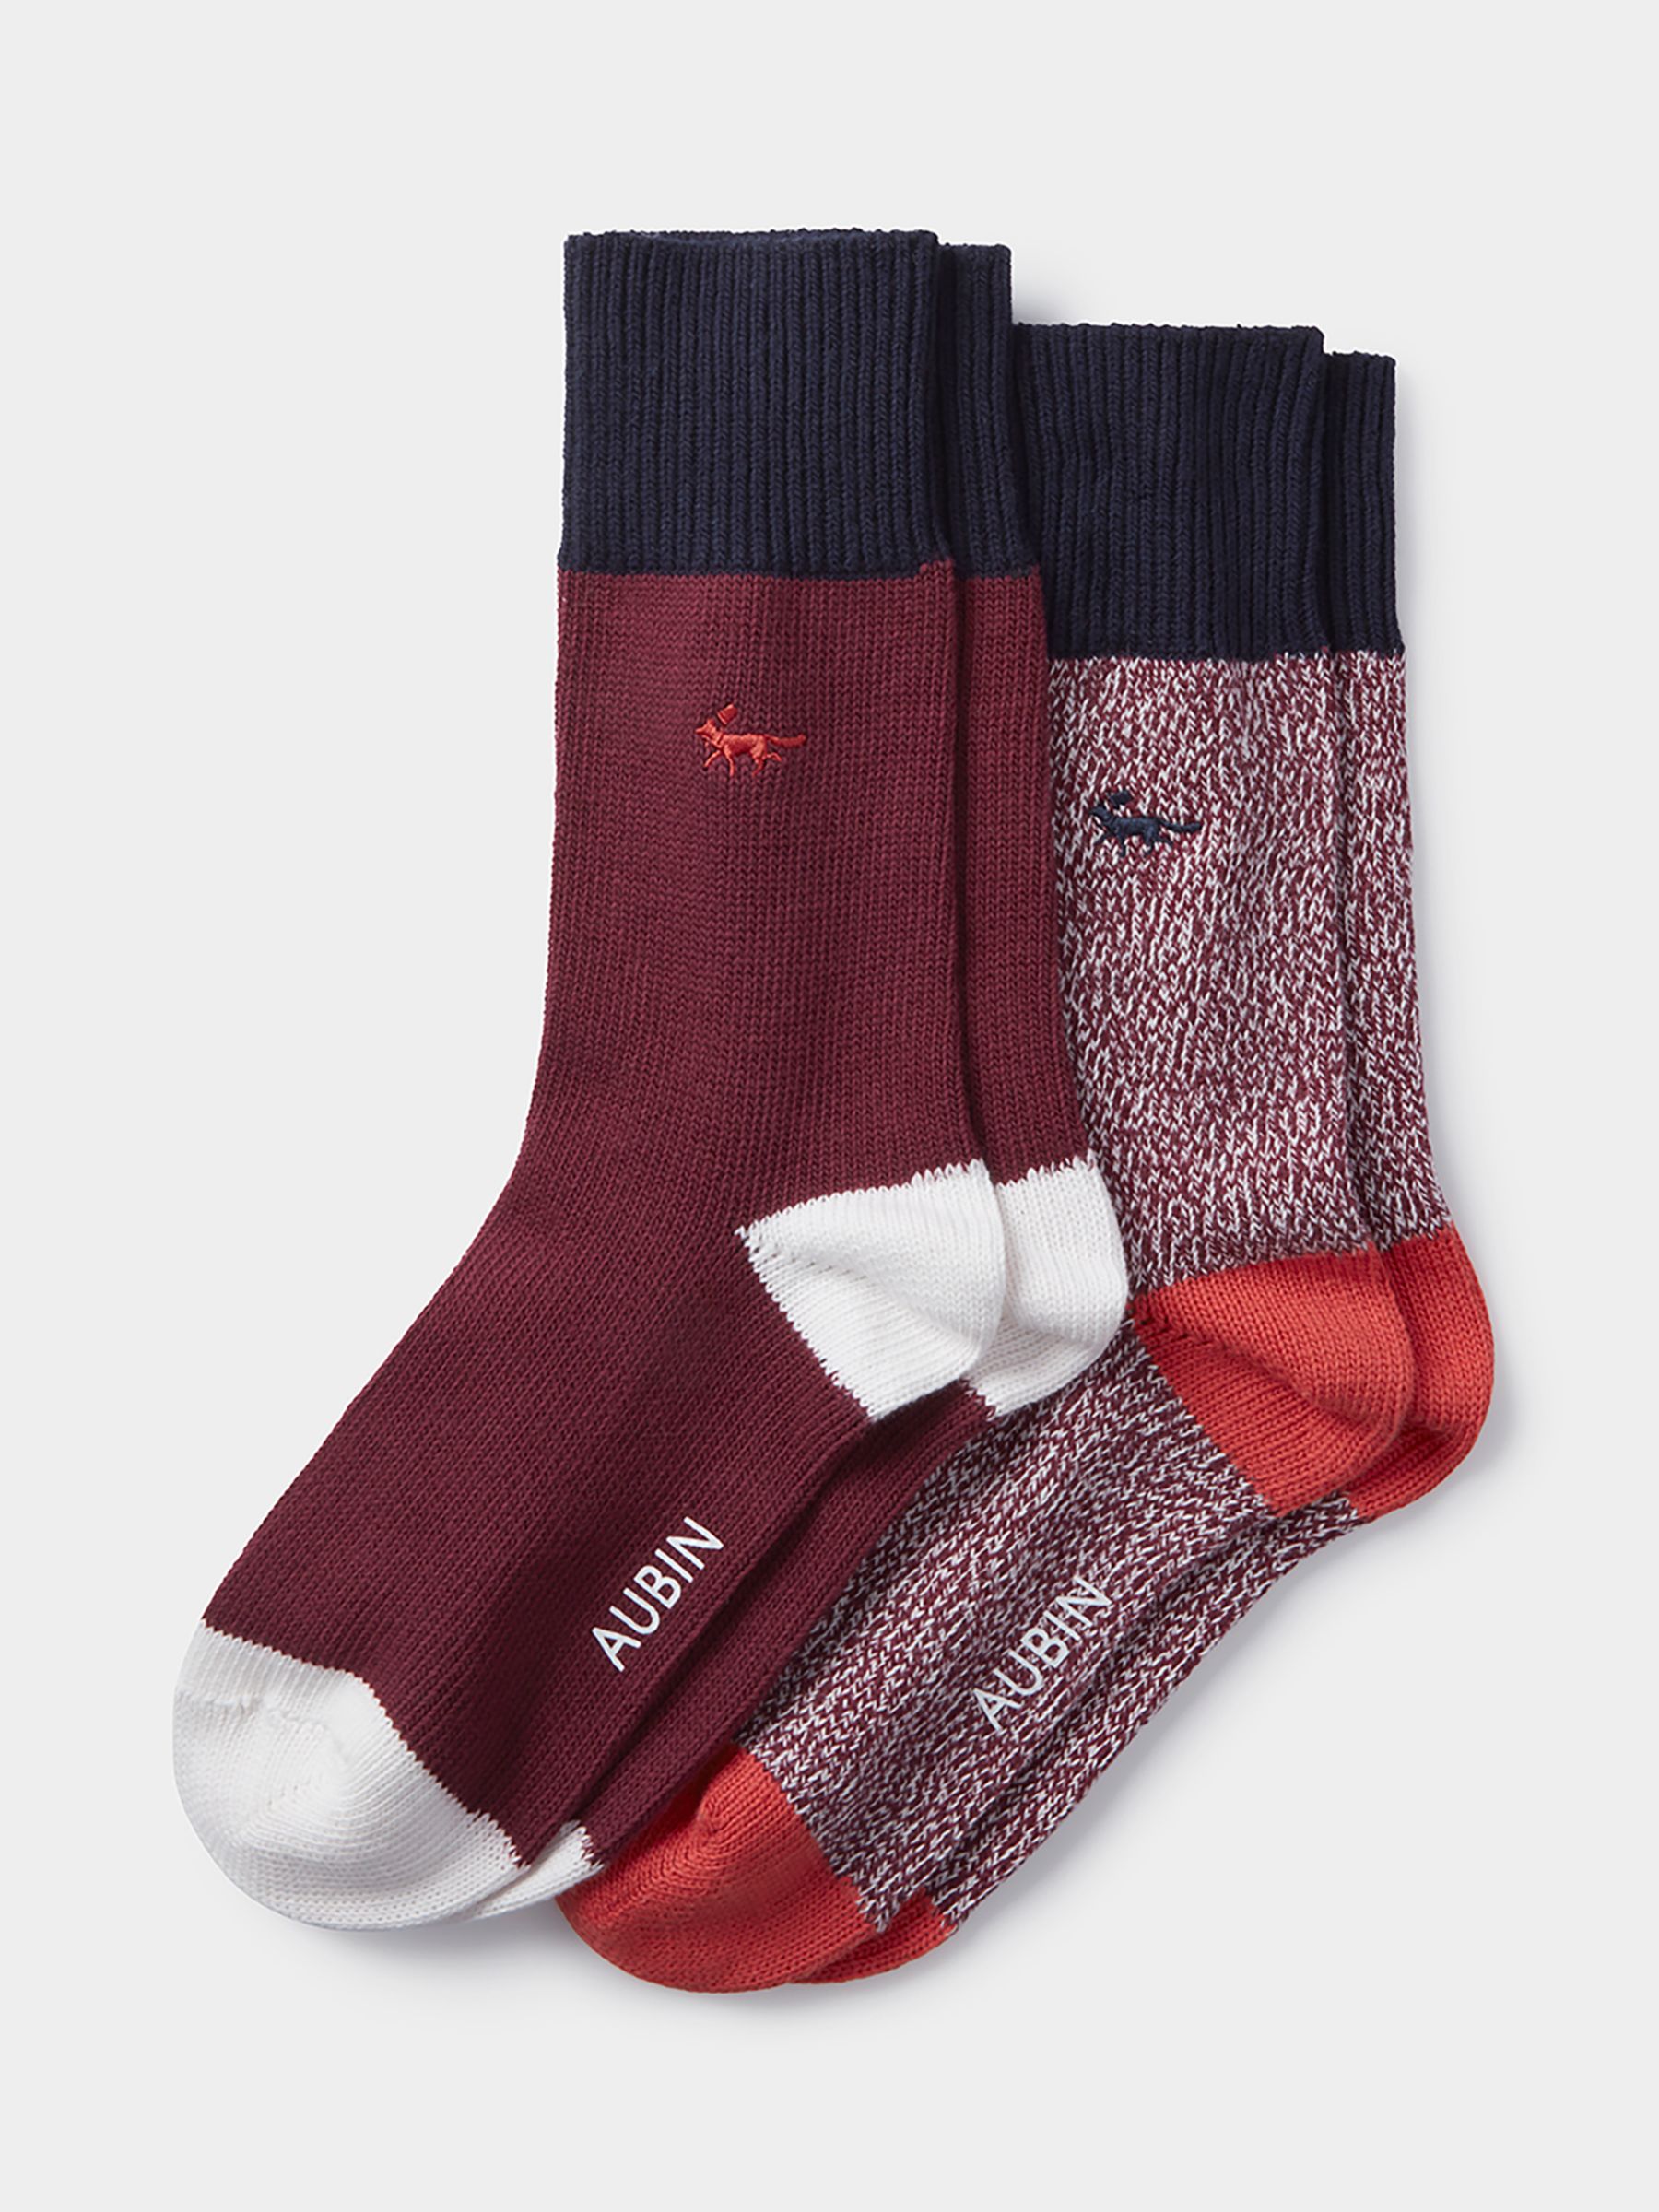 Buy Aubin Fowey Colour Block Socks, Pack of 2 Online at johnlewis.com